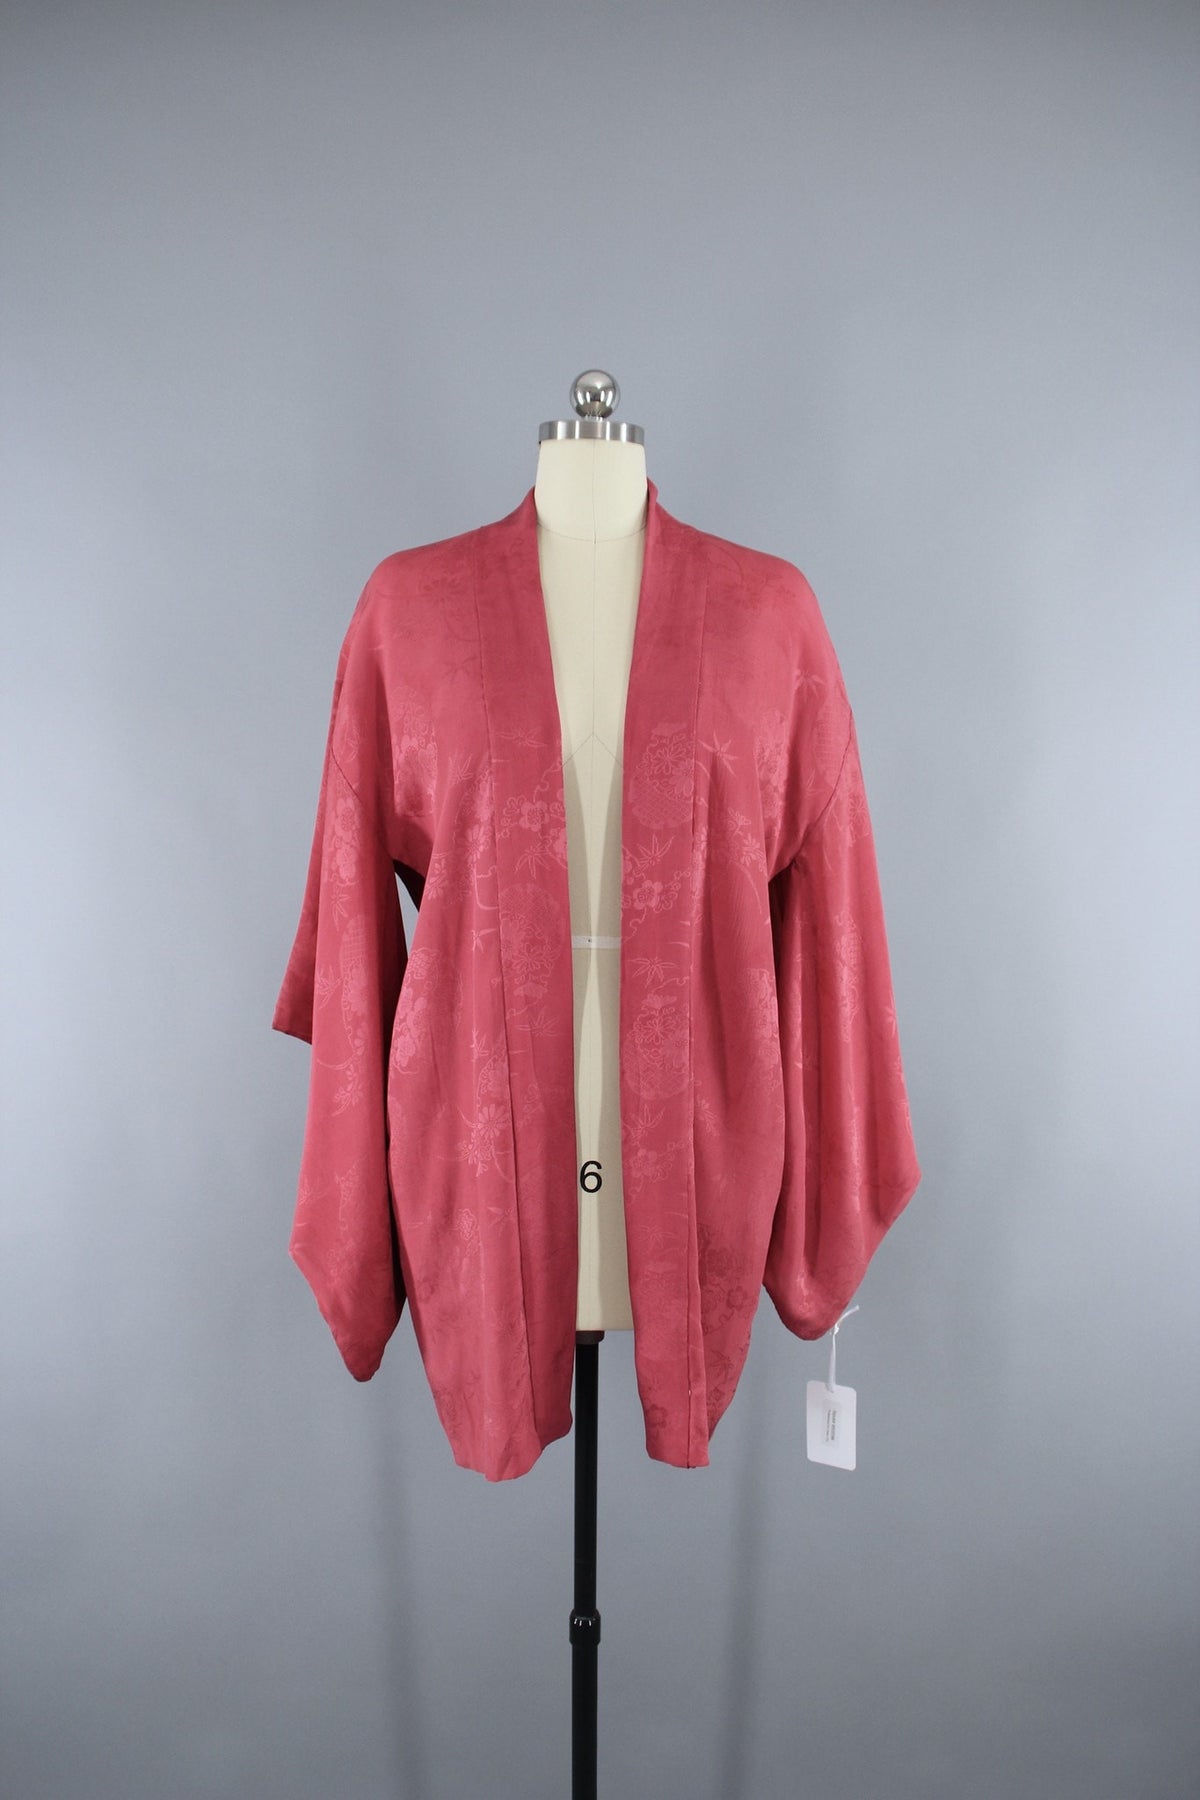 1930s Vintage Silk Haori Kimono Jacket in Dusty Rose Pink